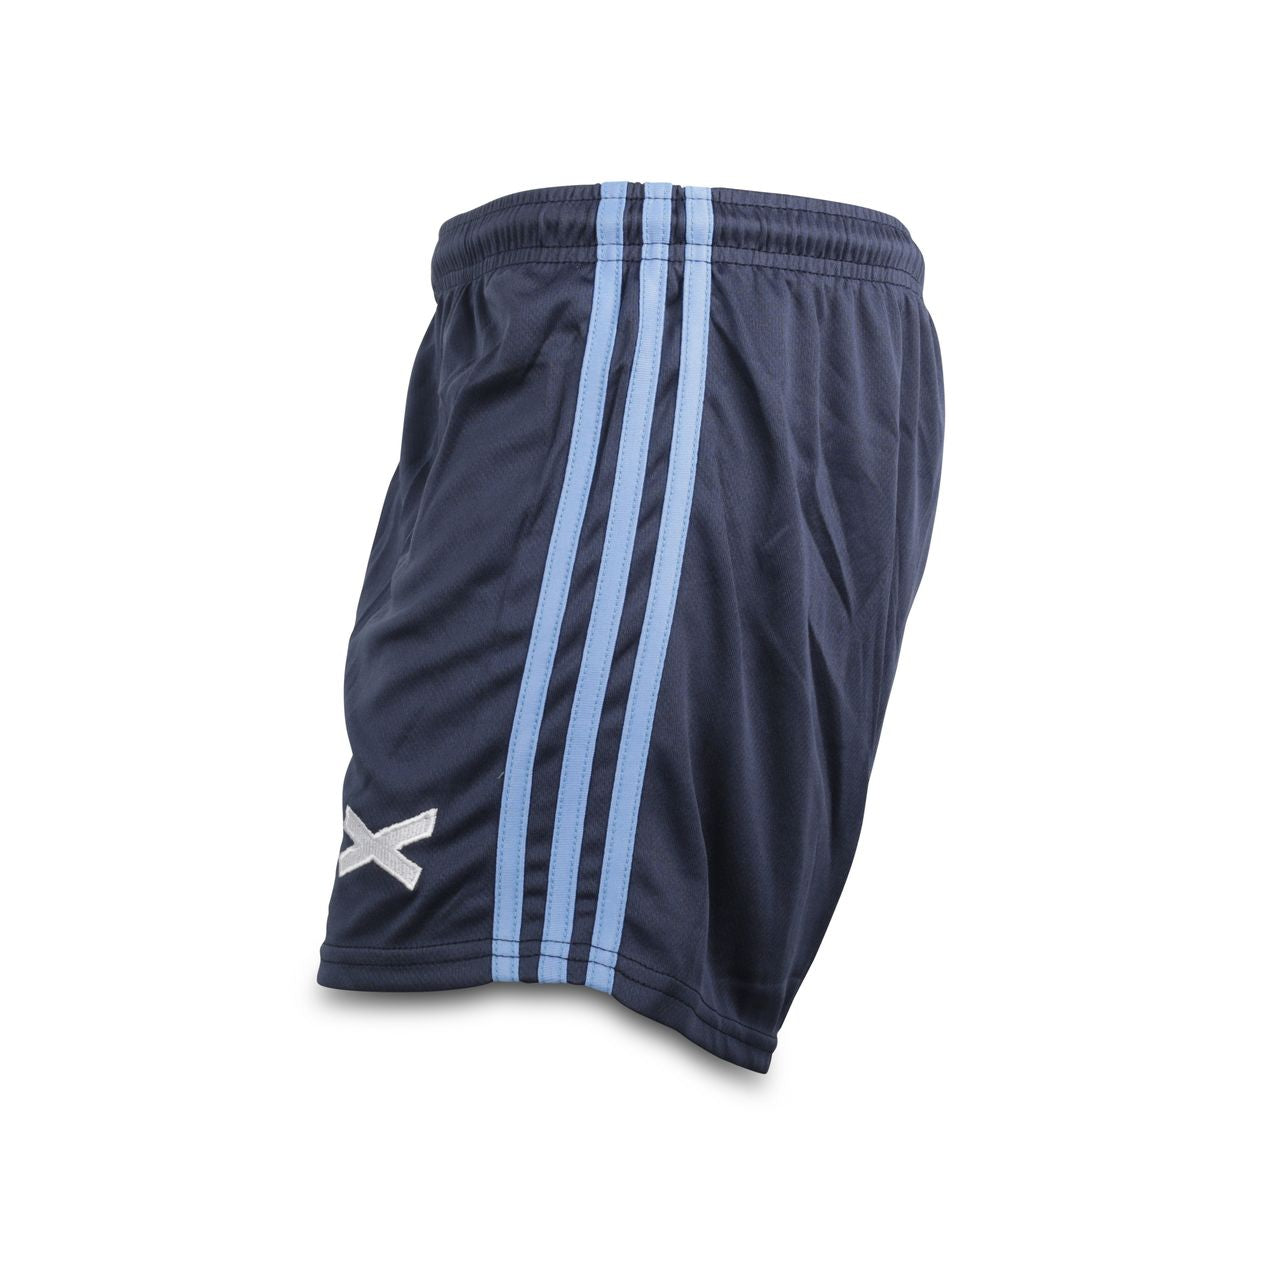 GAA Shorts Navy with Blue Stripes Gaelic Games Sportswear